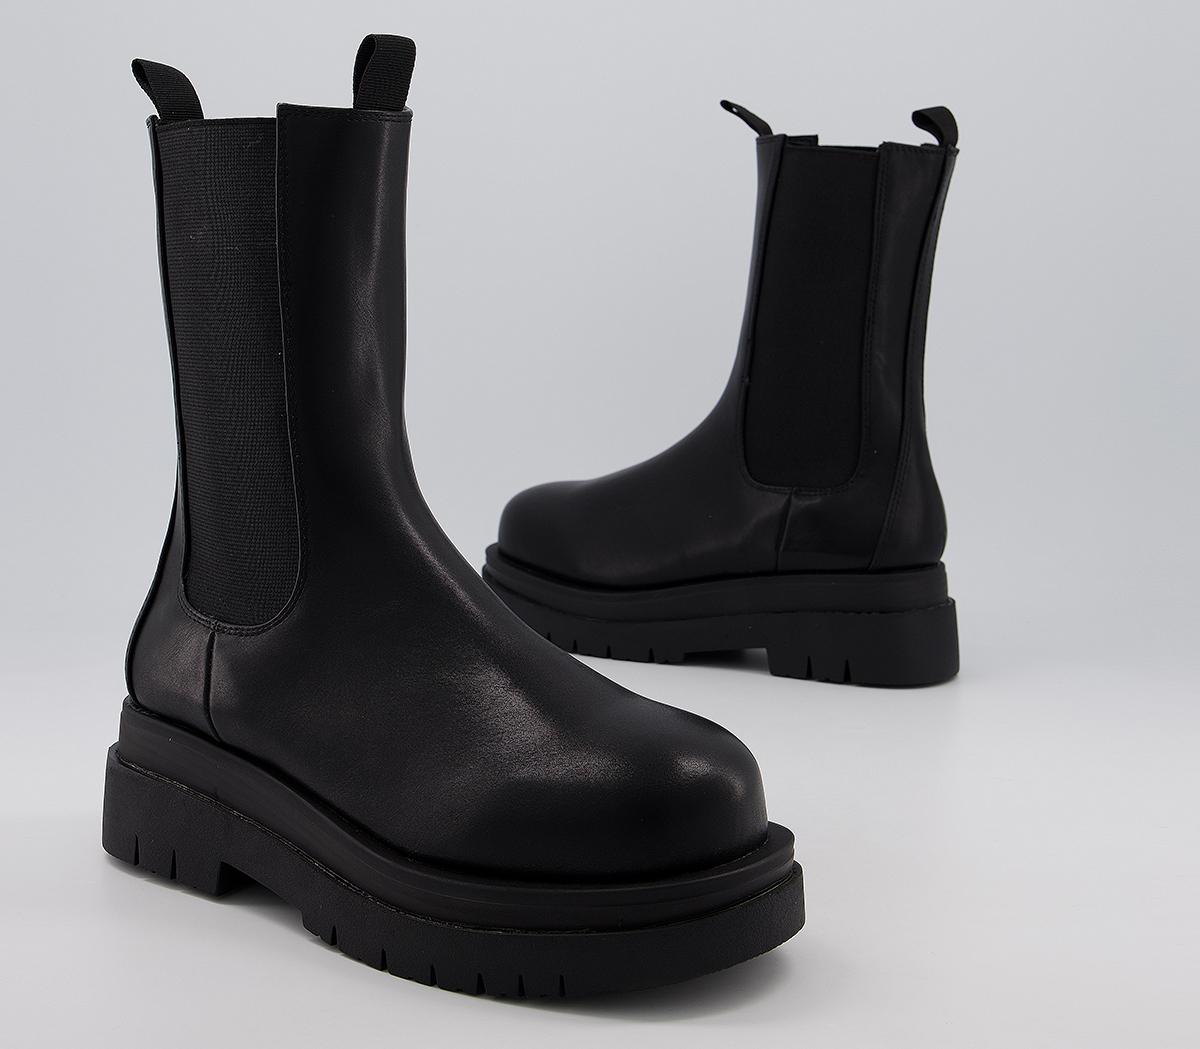 Koi Footwear Chunky Mid Calf Boots Black - Knee High Boots